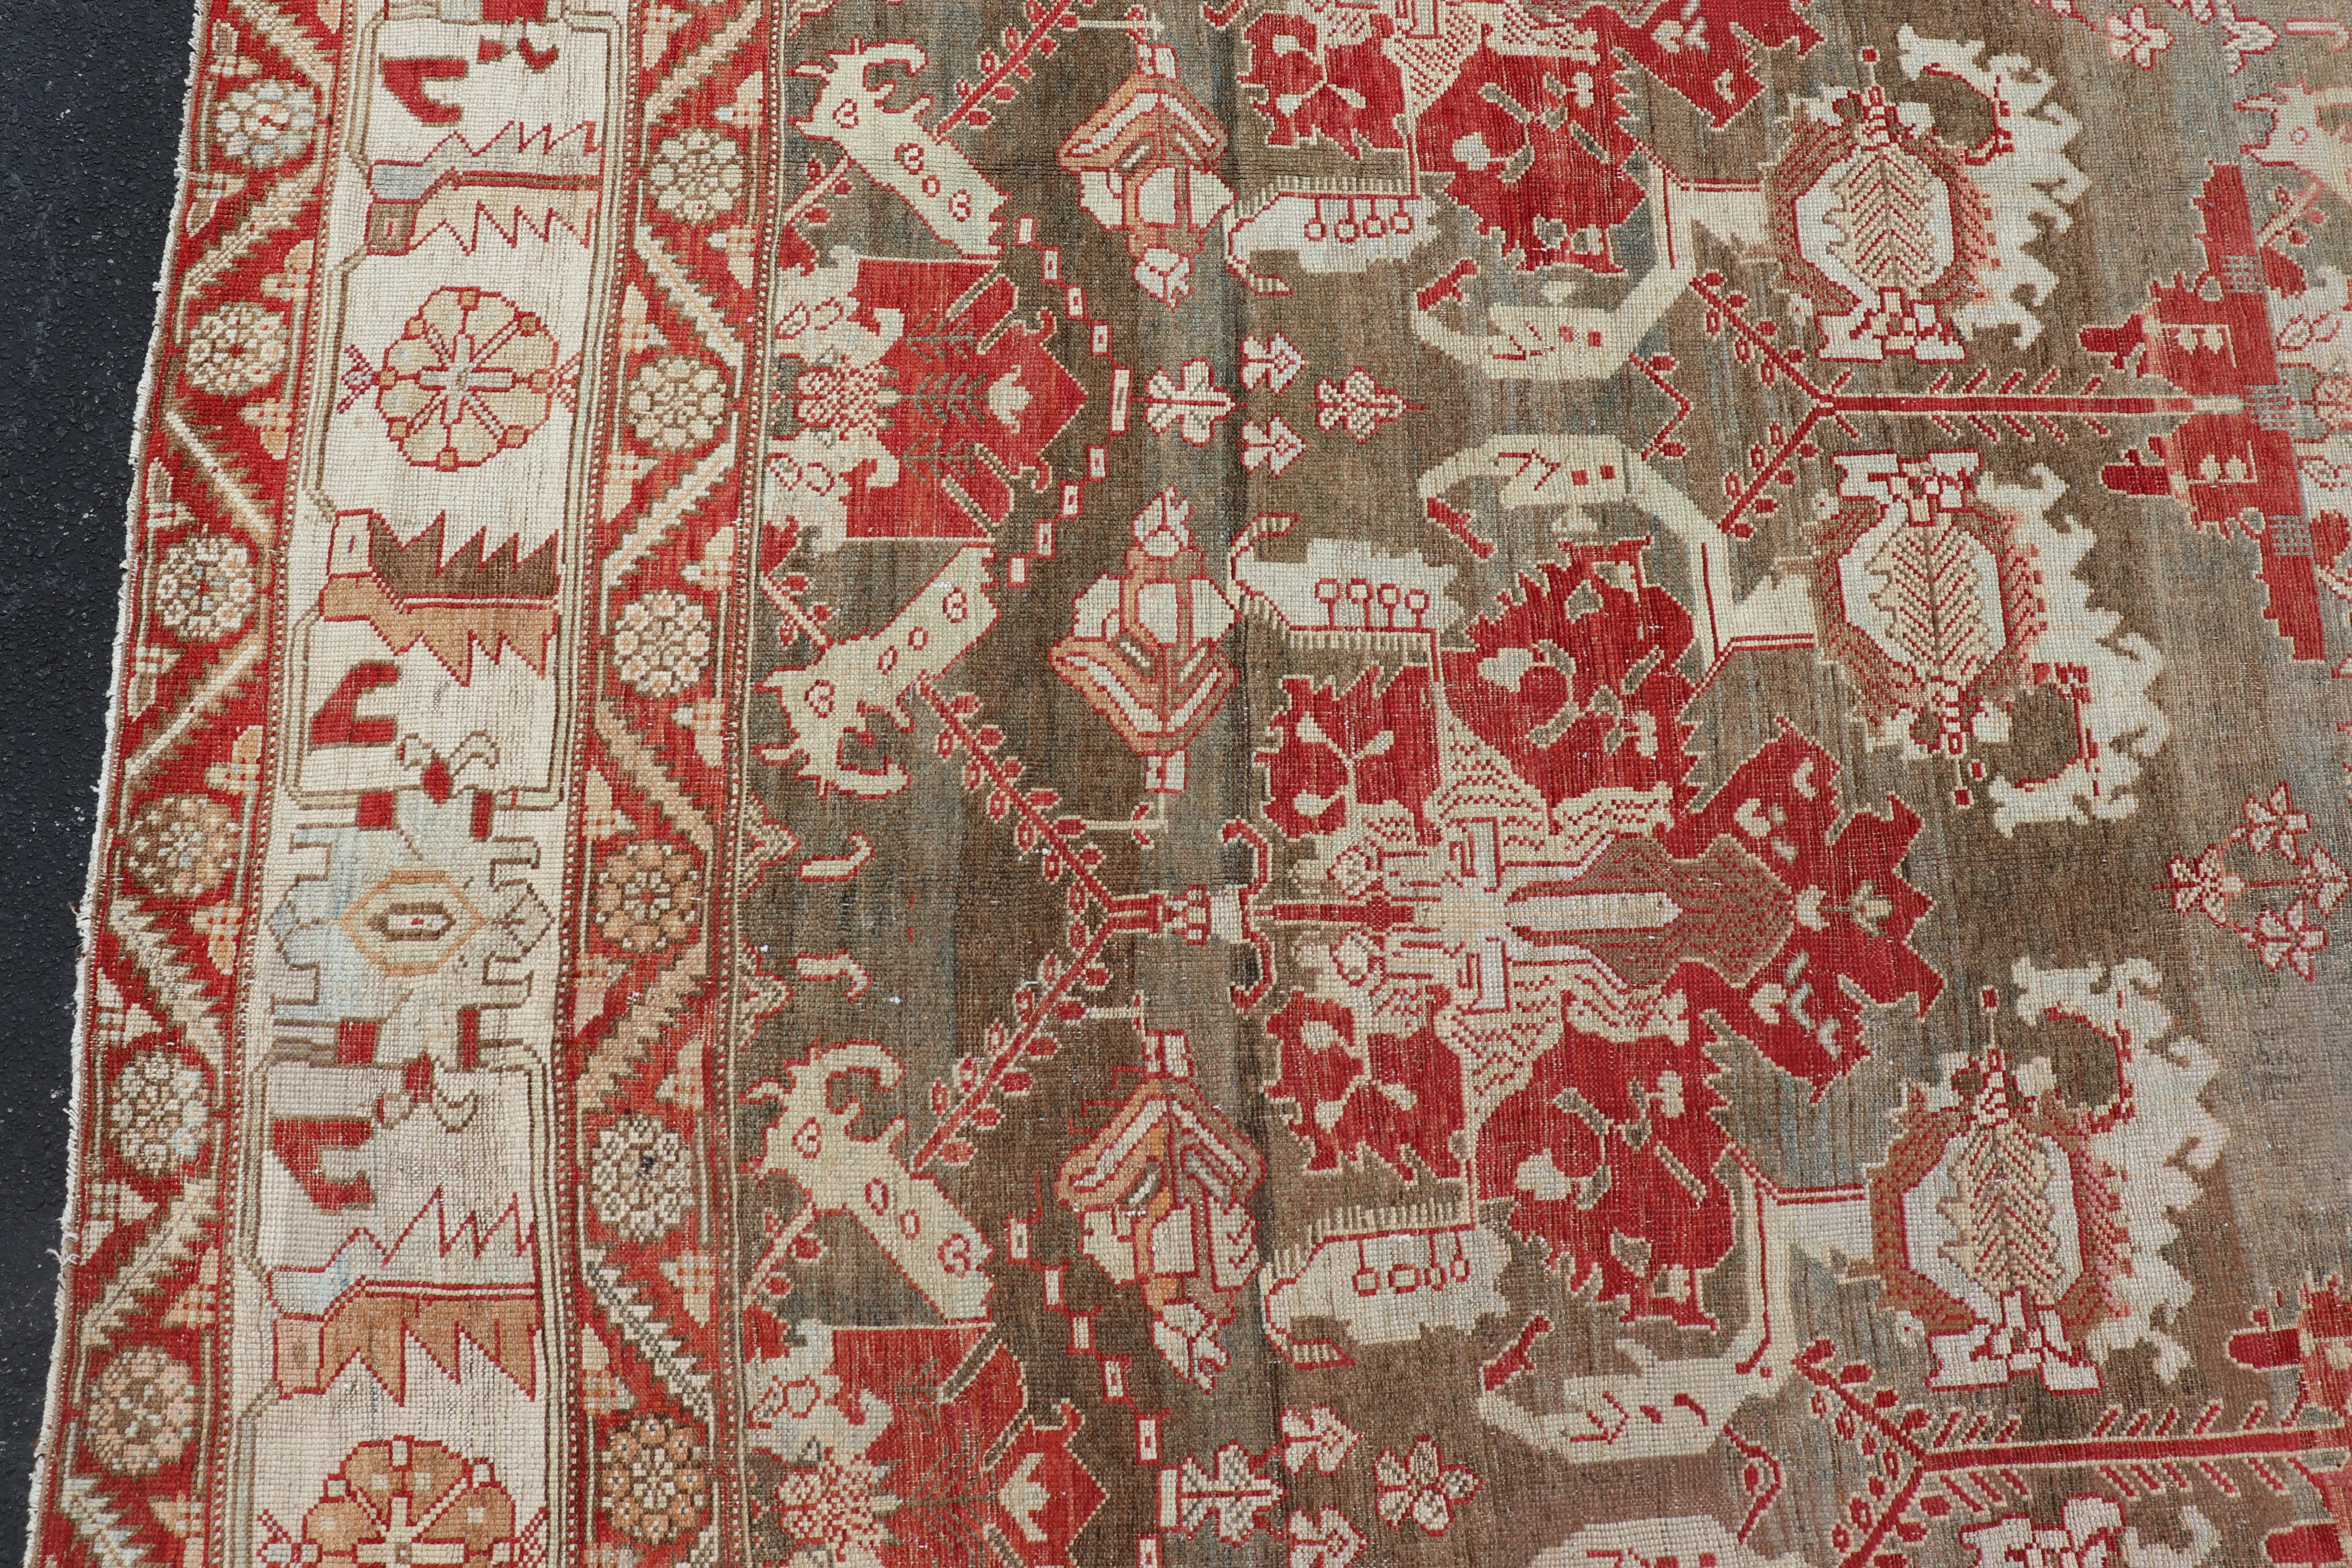 Antique Persian Large Scale Tribal Design Bakhtiari Rug in Multi Colors For Sale 4